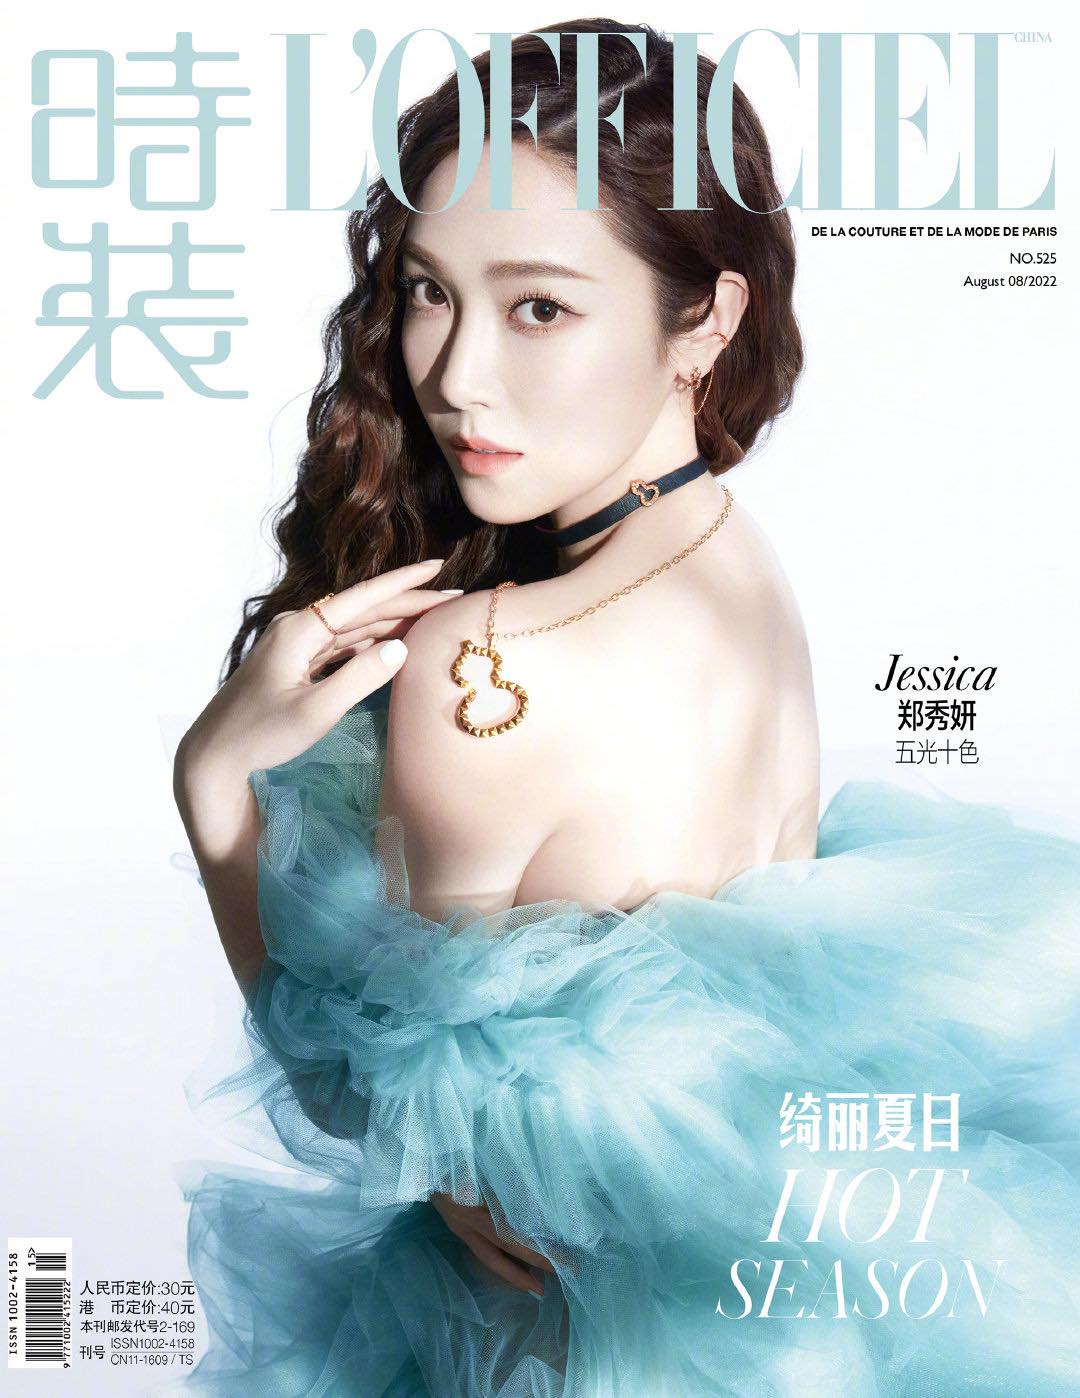 Jessica trên bìa tạp chí L'OFFICIEL CHINA tháng 8.2022 Ảnh: jessica.syj